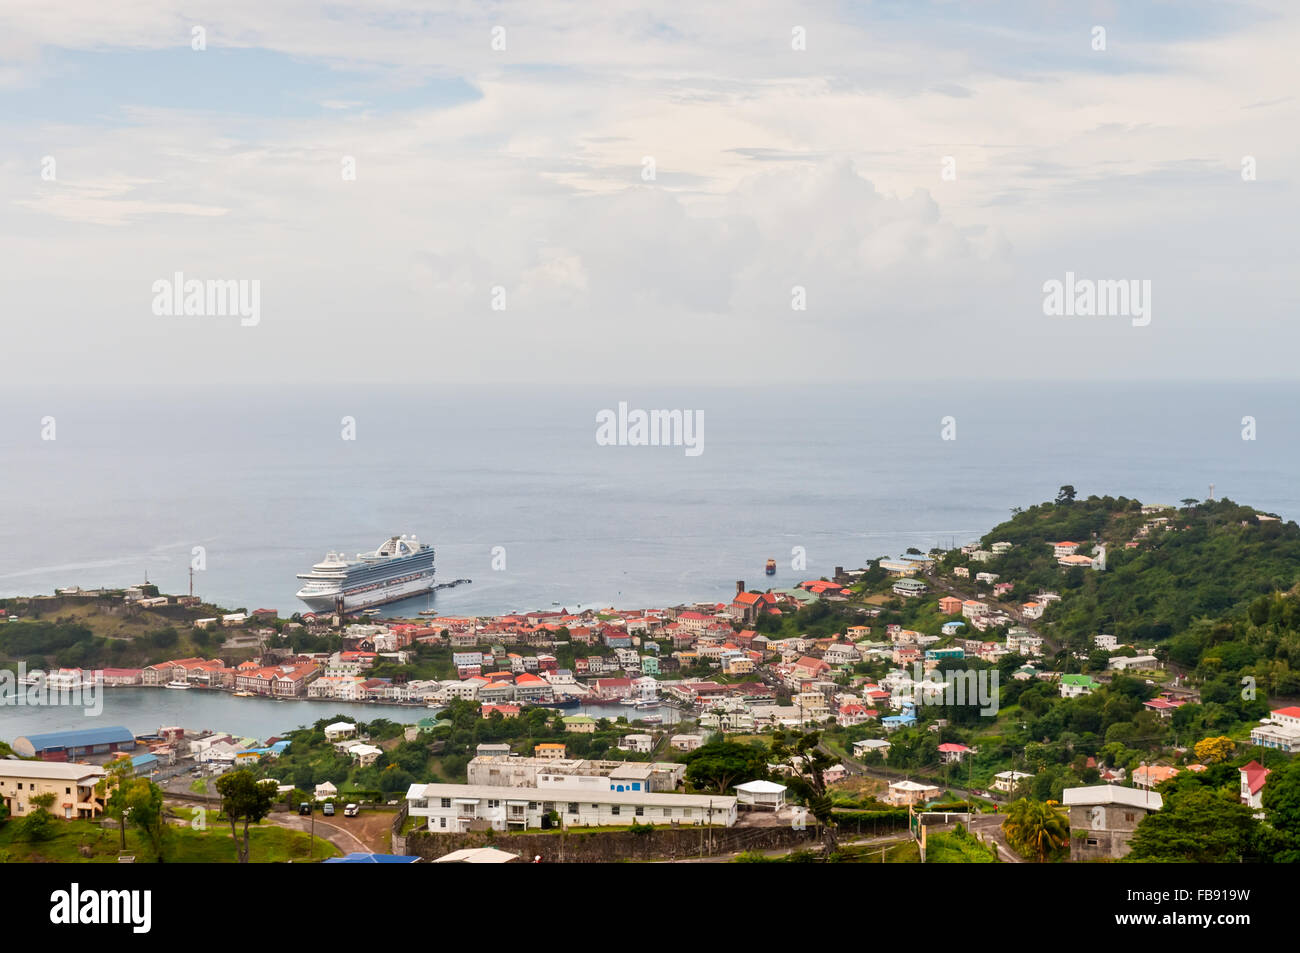 Panorama view over Saint George's in Grenada, Caribbean. Stock Photo